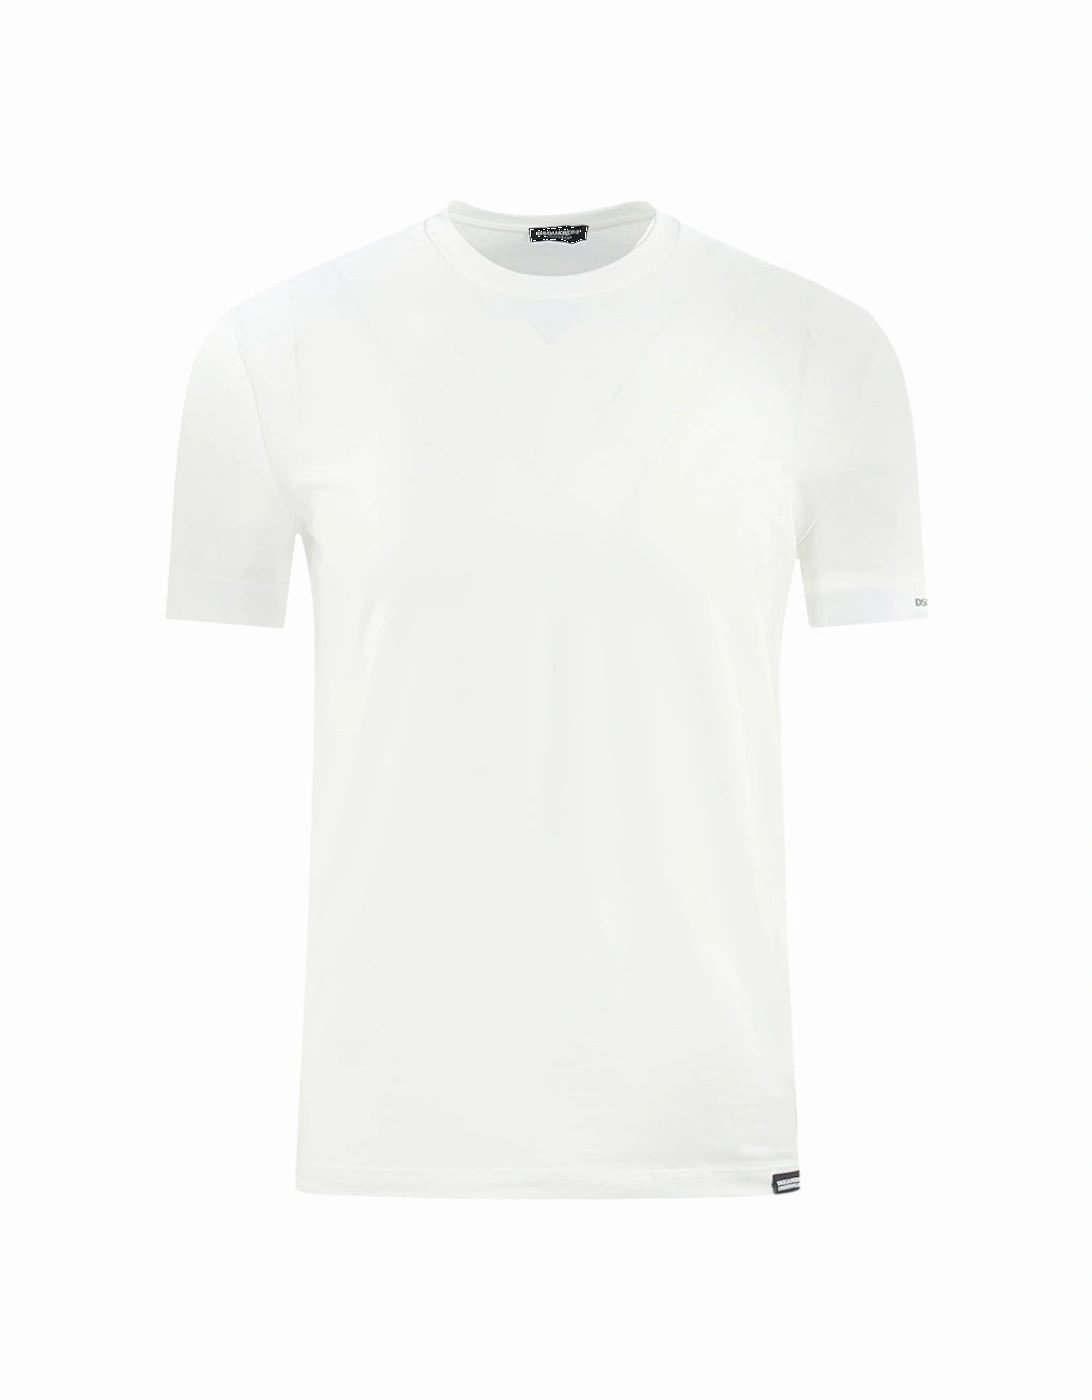 Bold Brand Logo on Sleeve White Underwear T-Shirt, 4 of 3